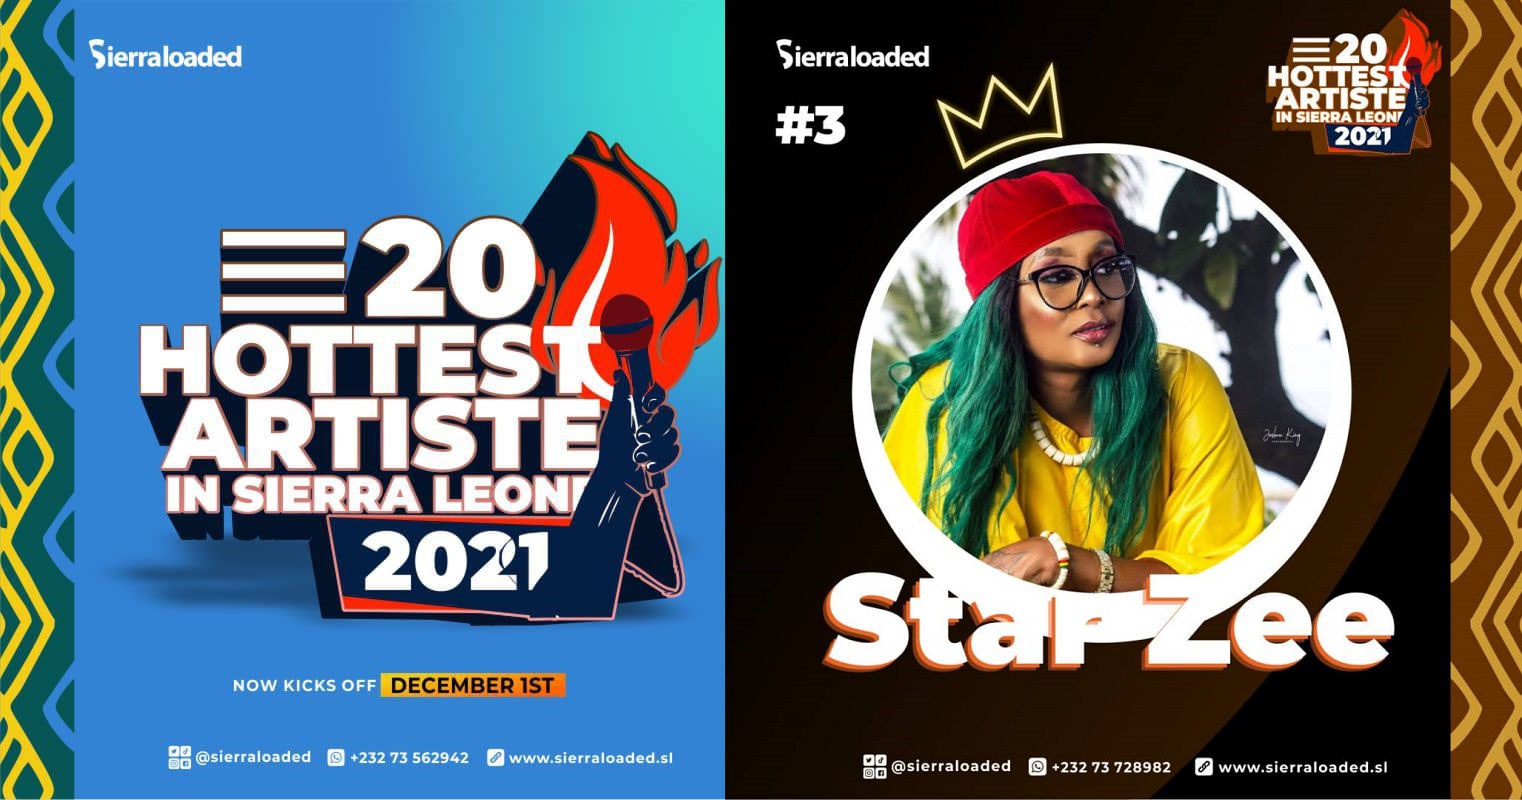 The 20 Hottest Artistes in Sierra Leone 2021: Star Zee – #3